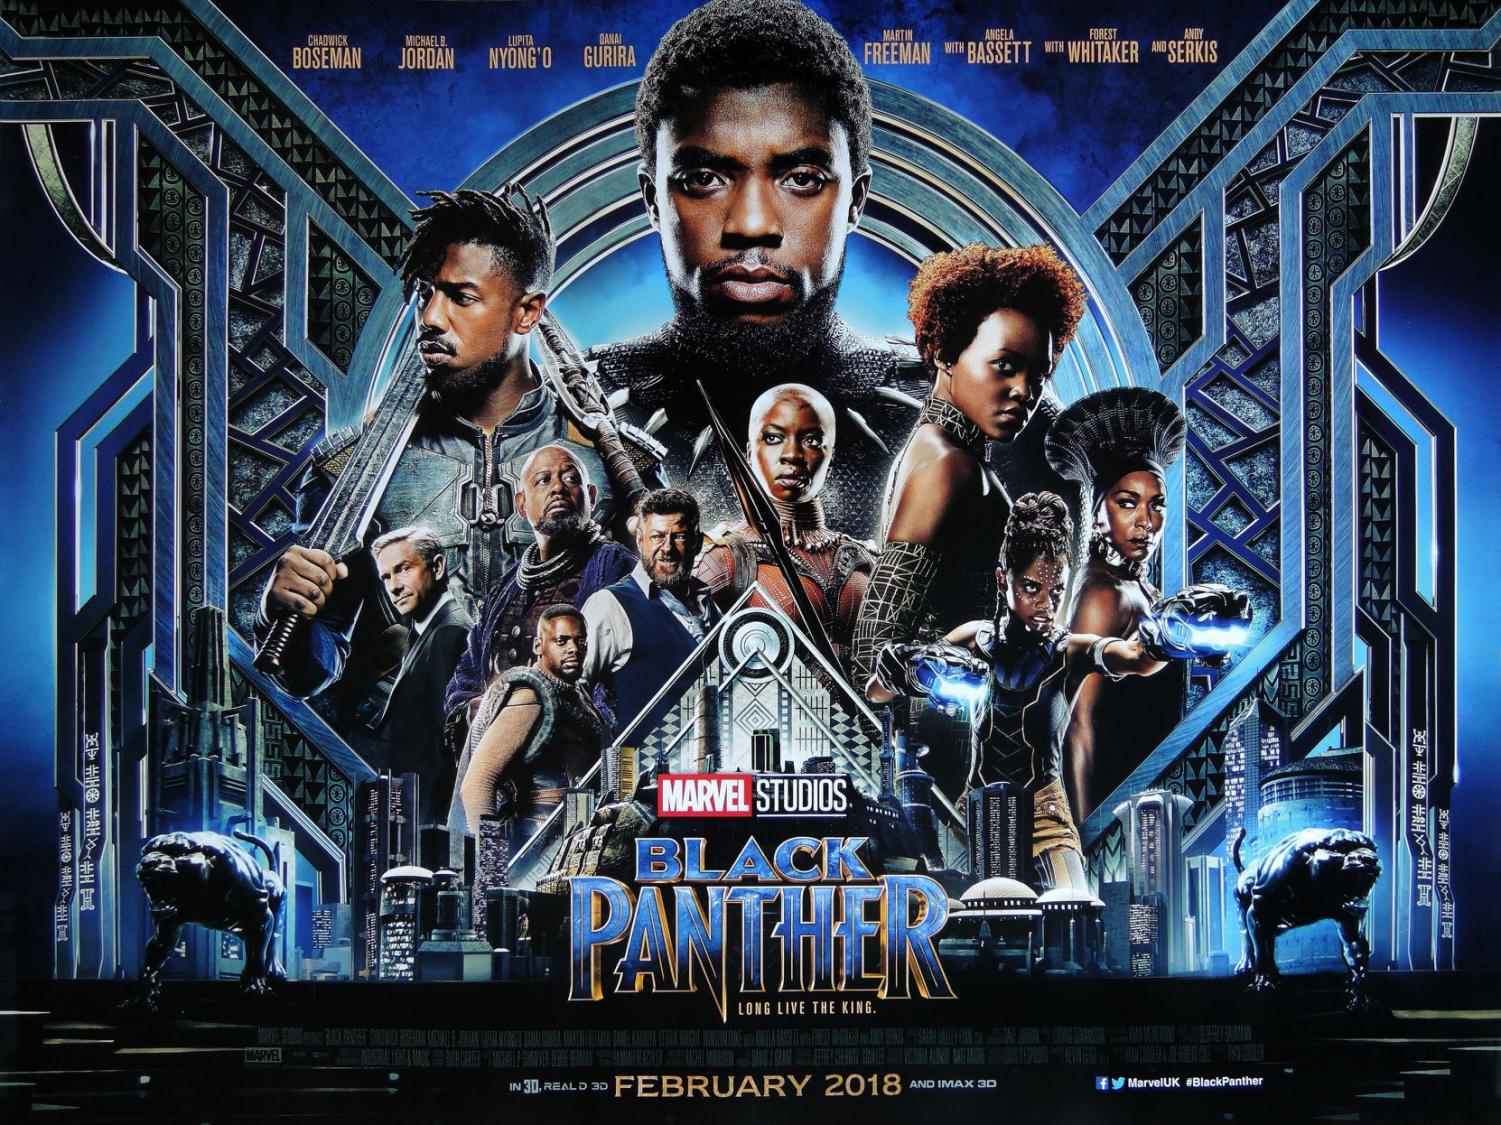 Roaring+into+the+Marvel+Cinematic+Universe%2C+%E2%80%9CBlack+Panther%E2%80%9D+makes+memorable+debut